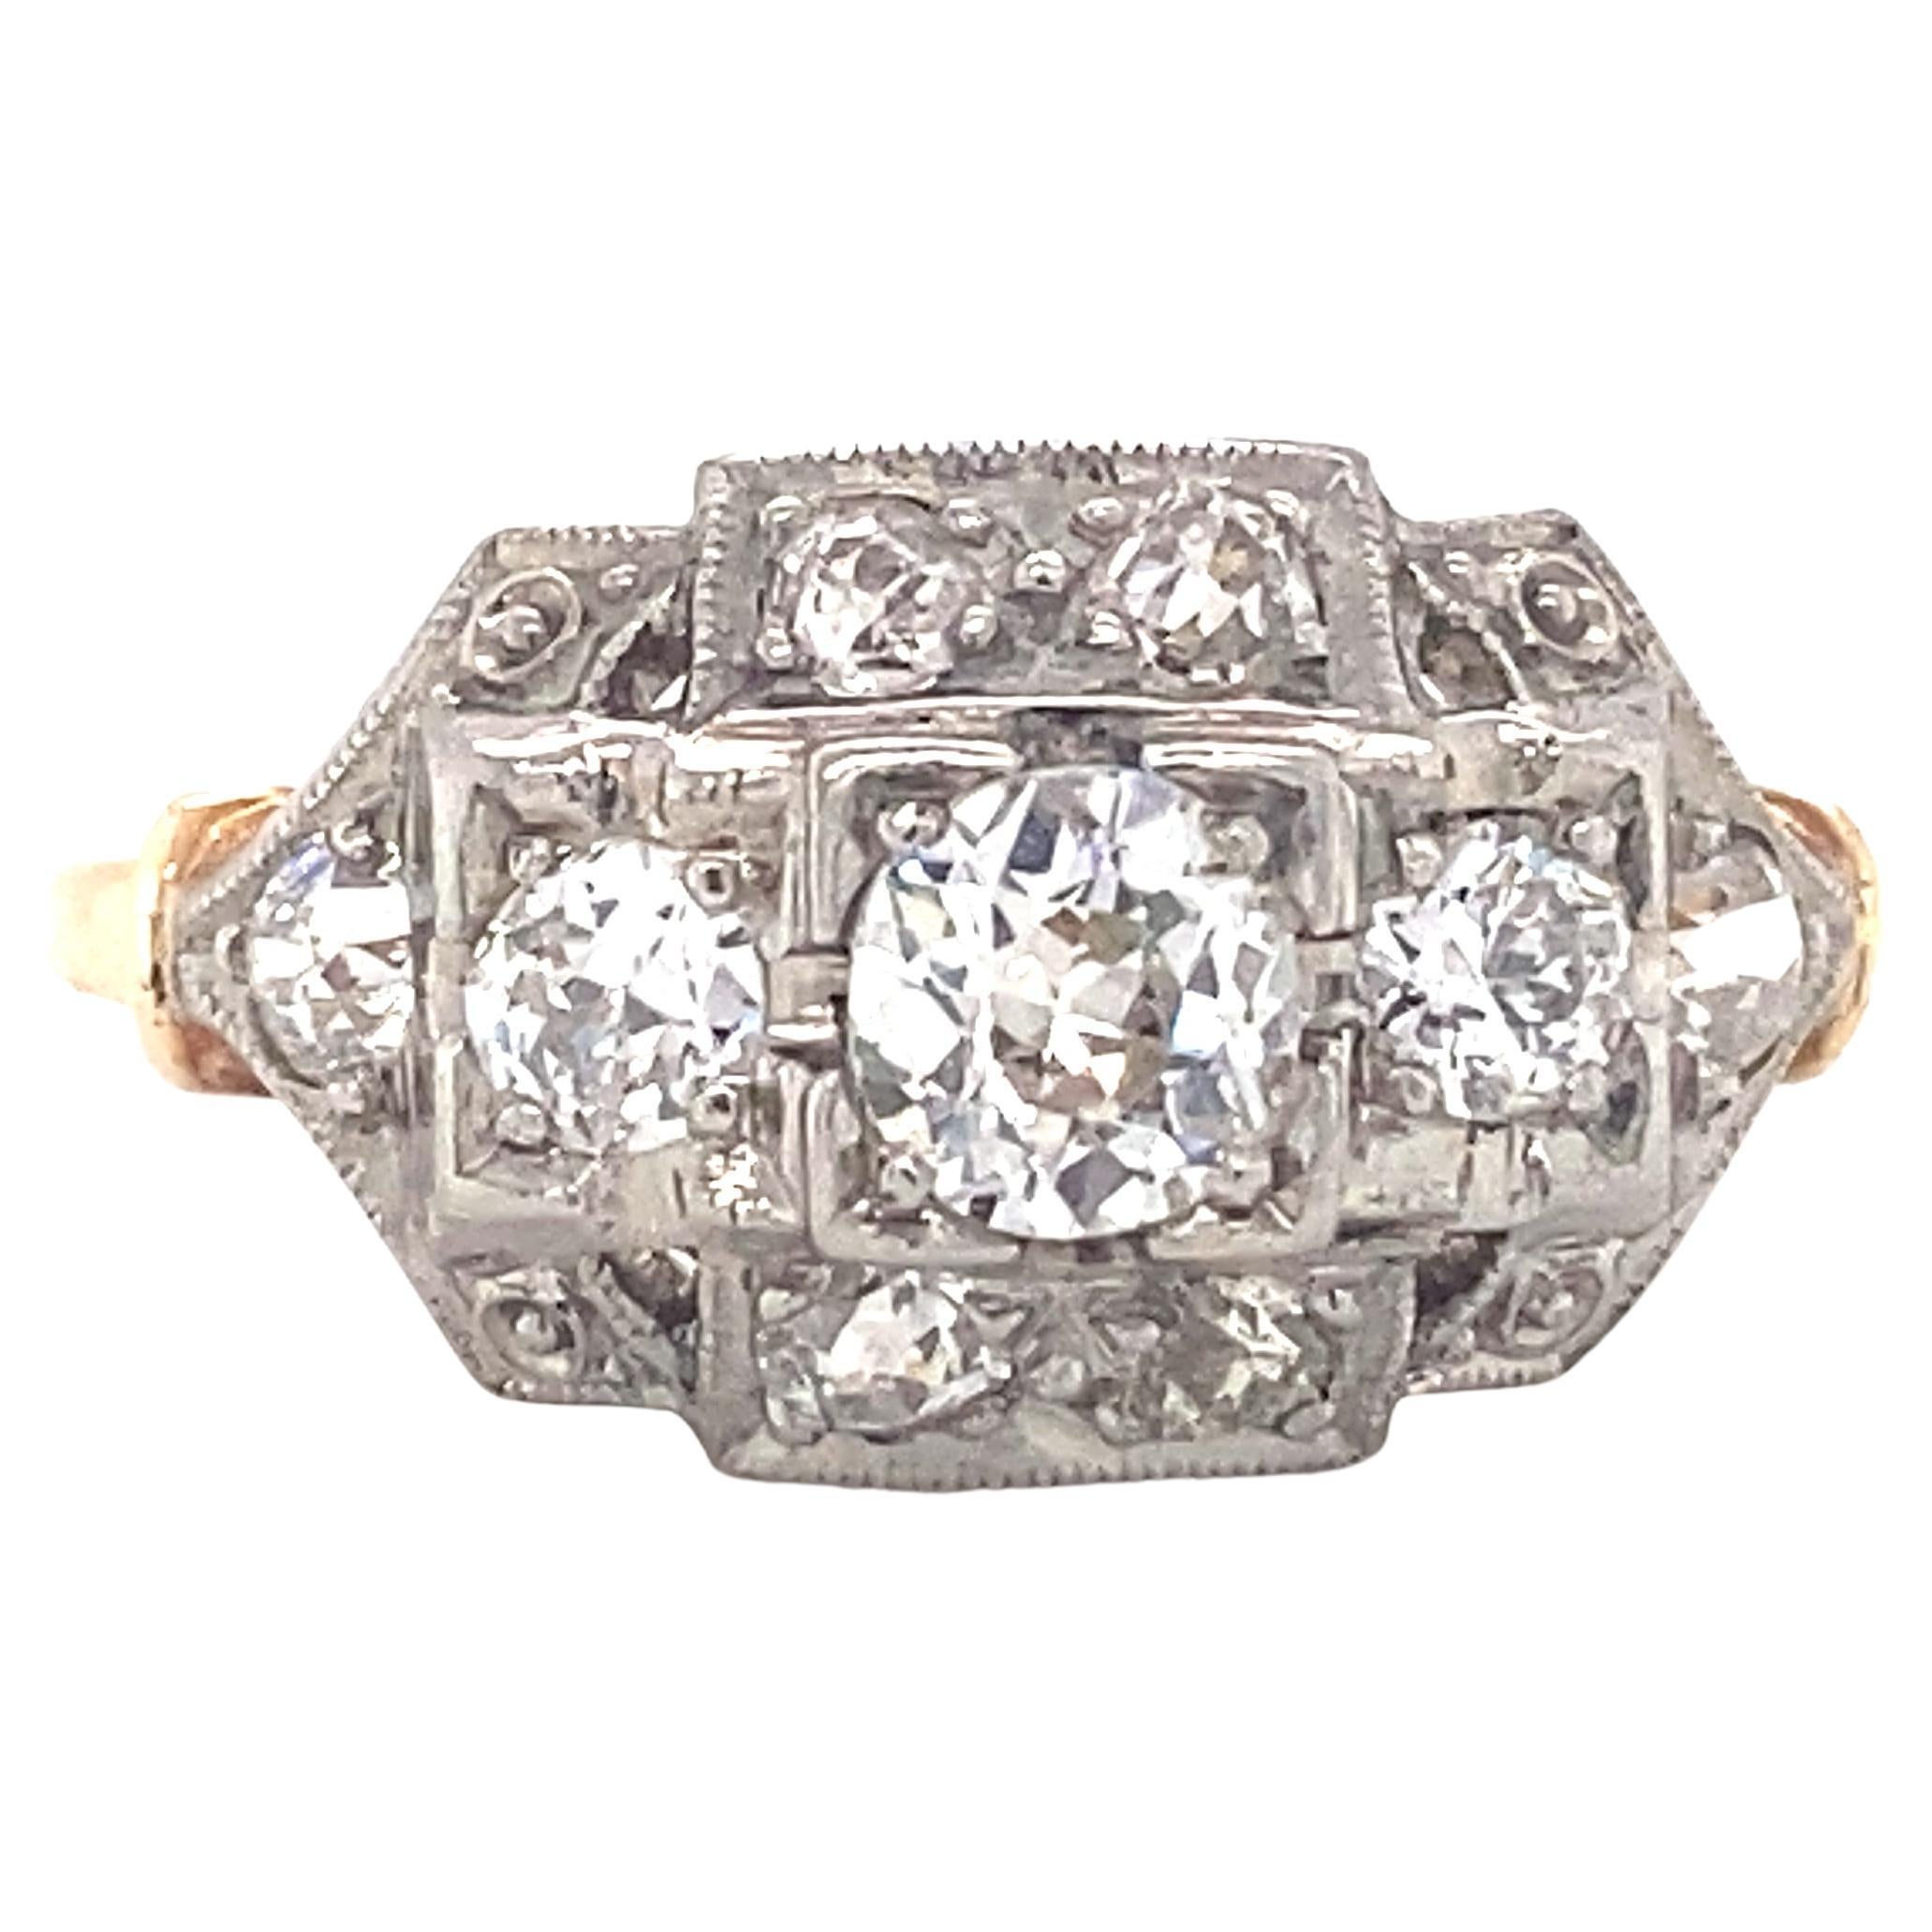 circa 1920 Art Deco Jabel 1 Carat Diamond Ring in Two Tone 14K Gold